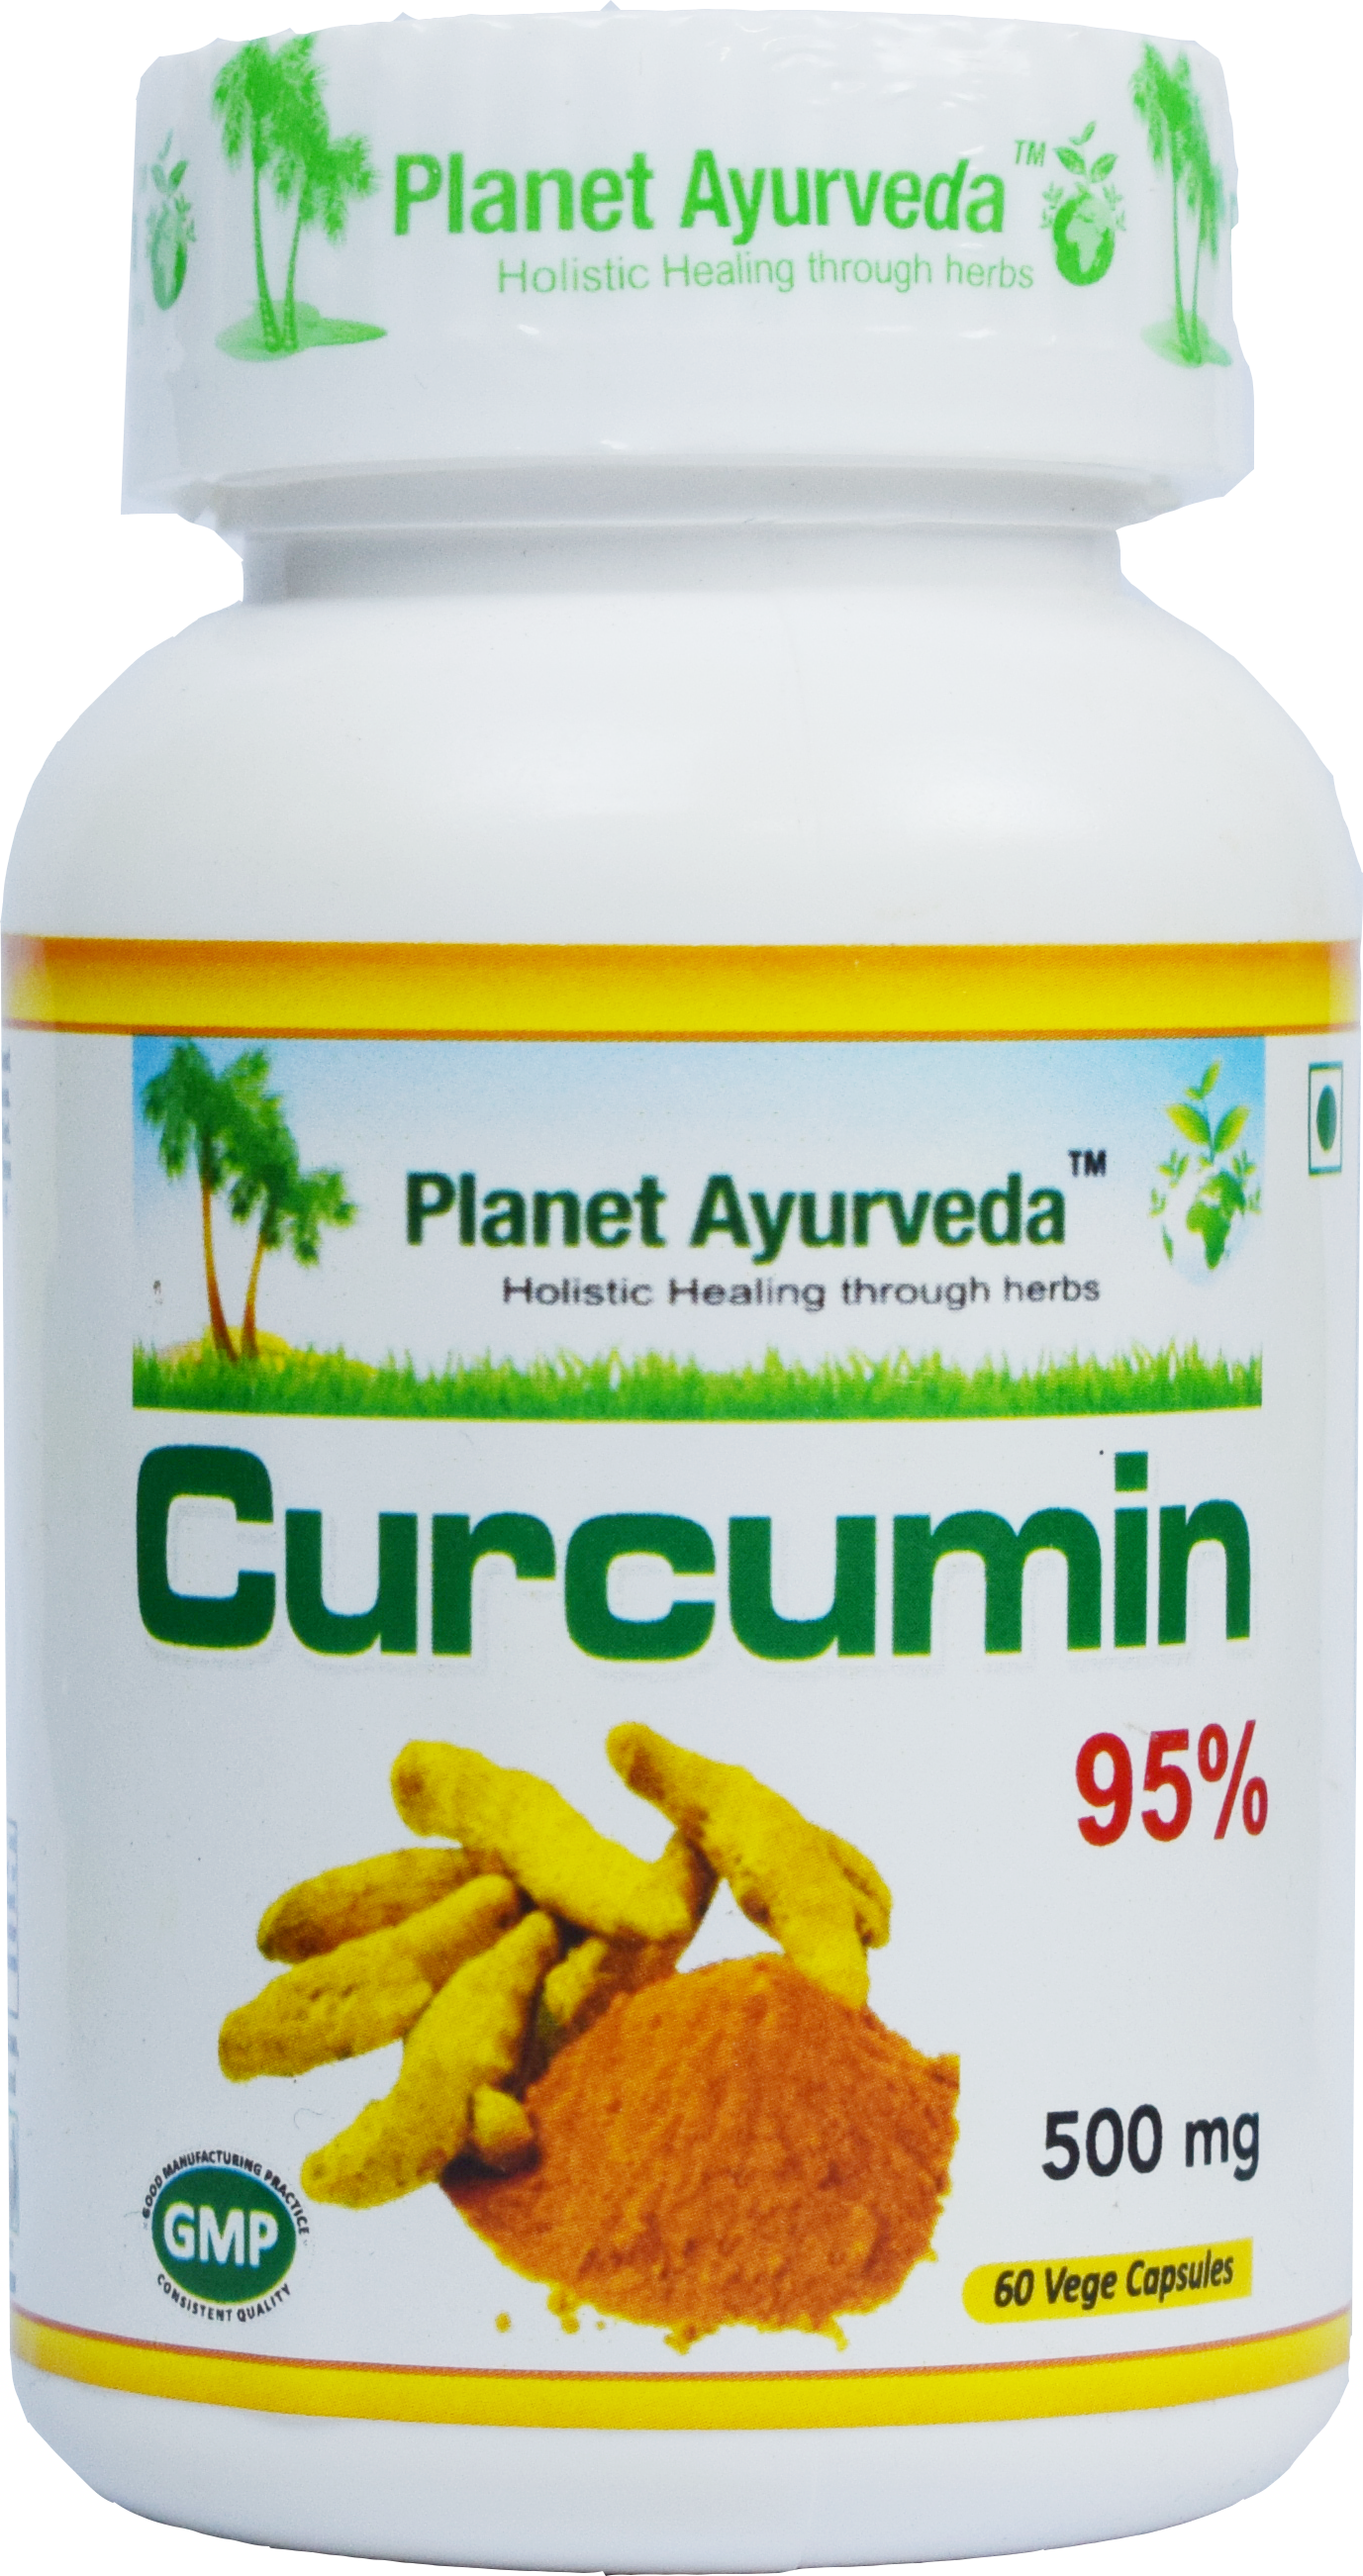 Buy Planet Ayurveda Curcumin 95% Capsules at Best Price Online